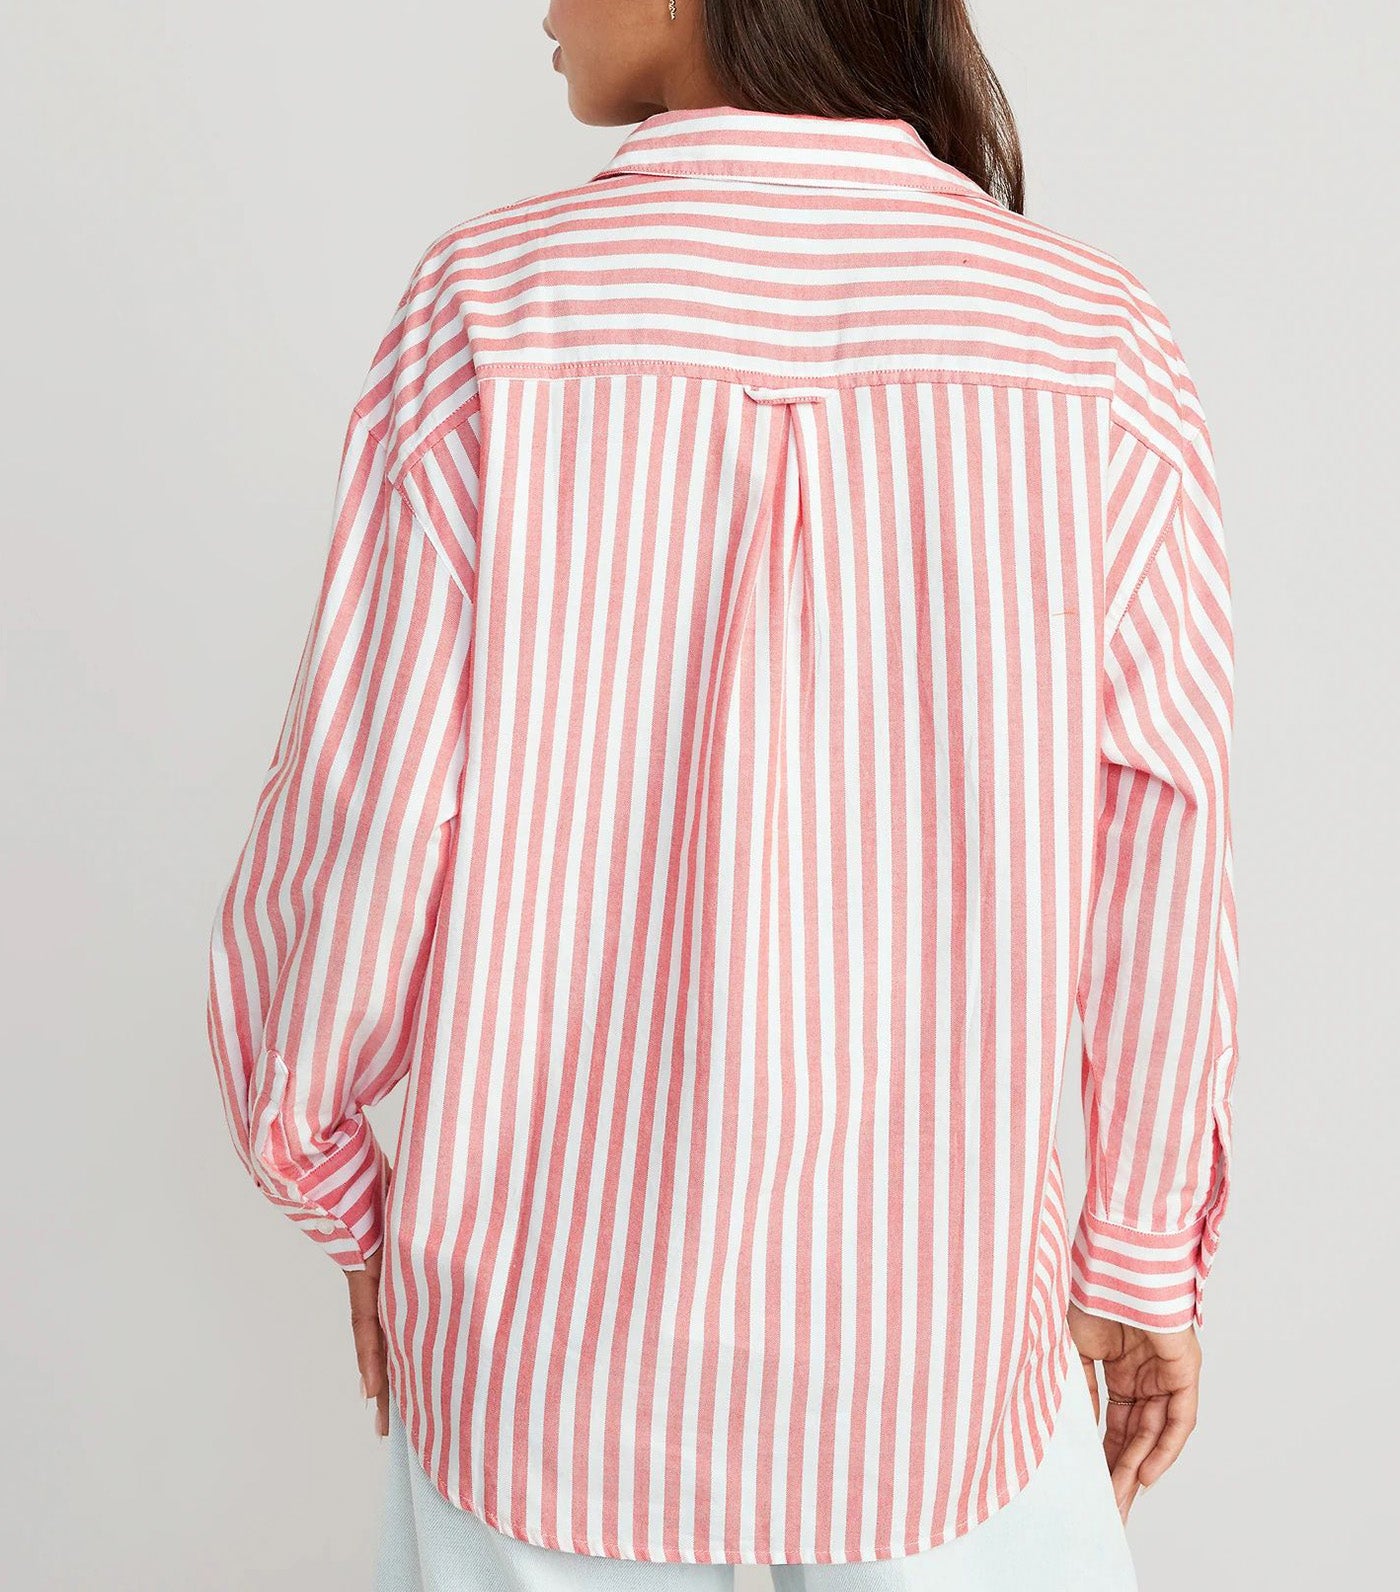 Striped Oxford Boyfriend Shirt for Women White/Red Stripe